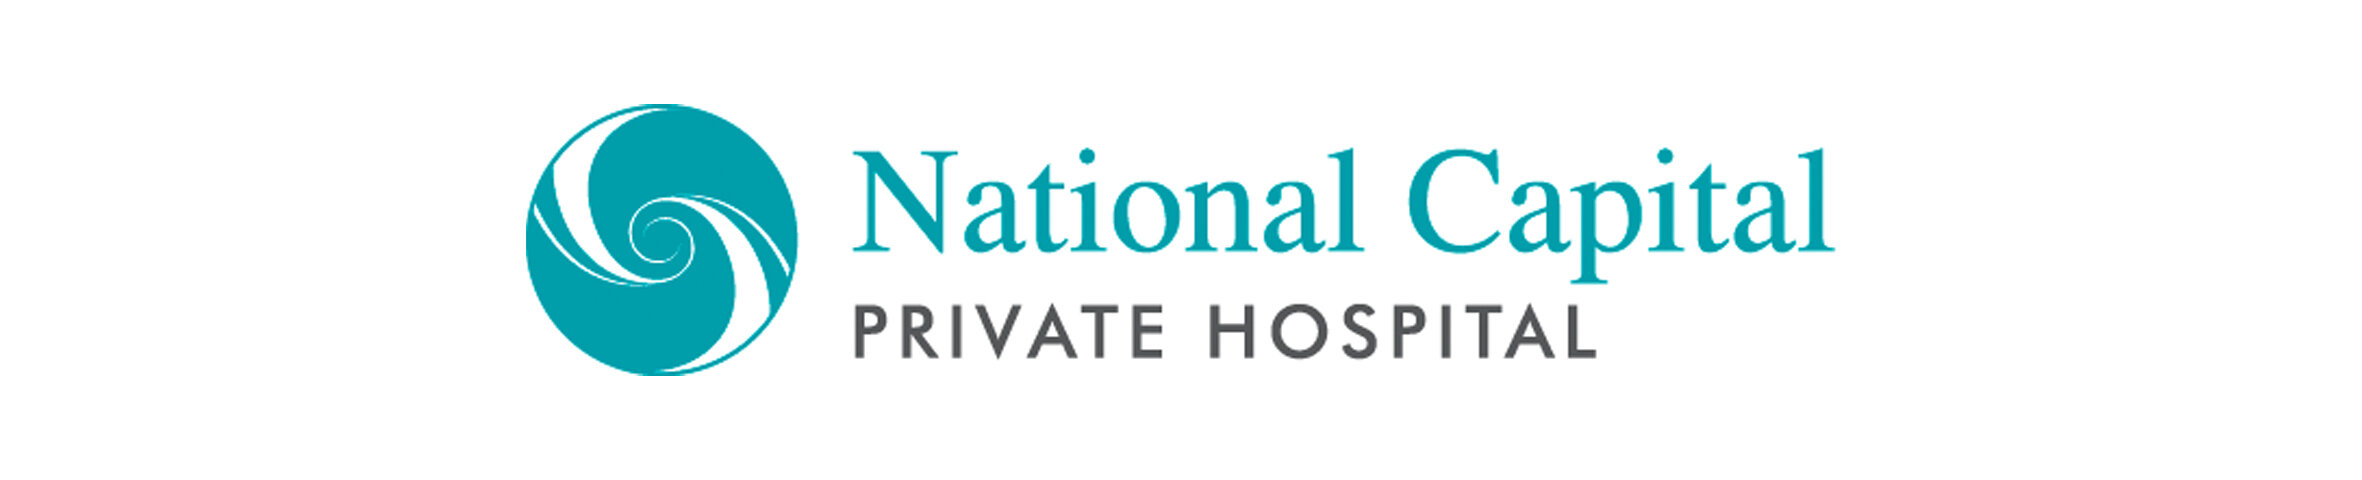 National Capital Private Hospital